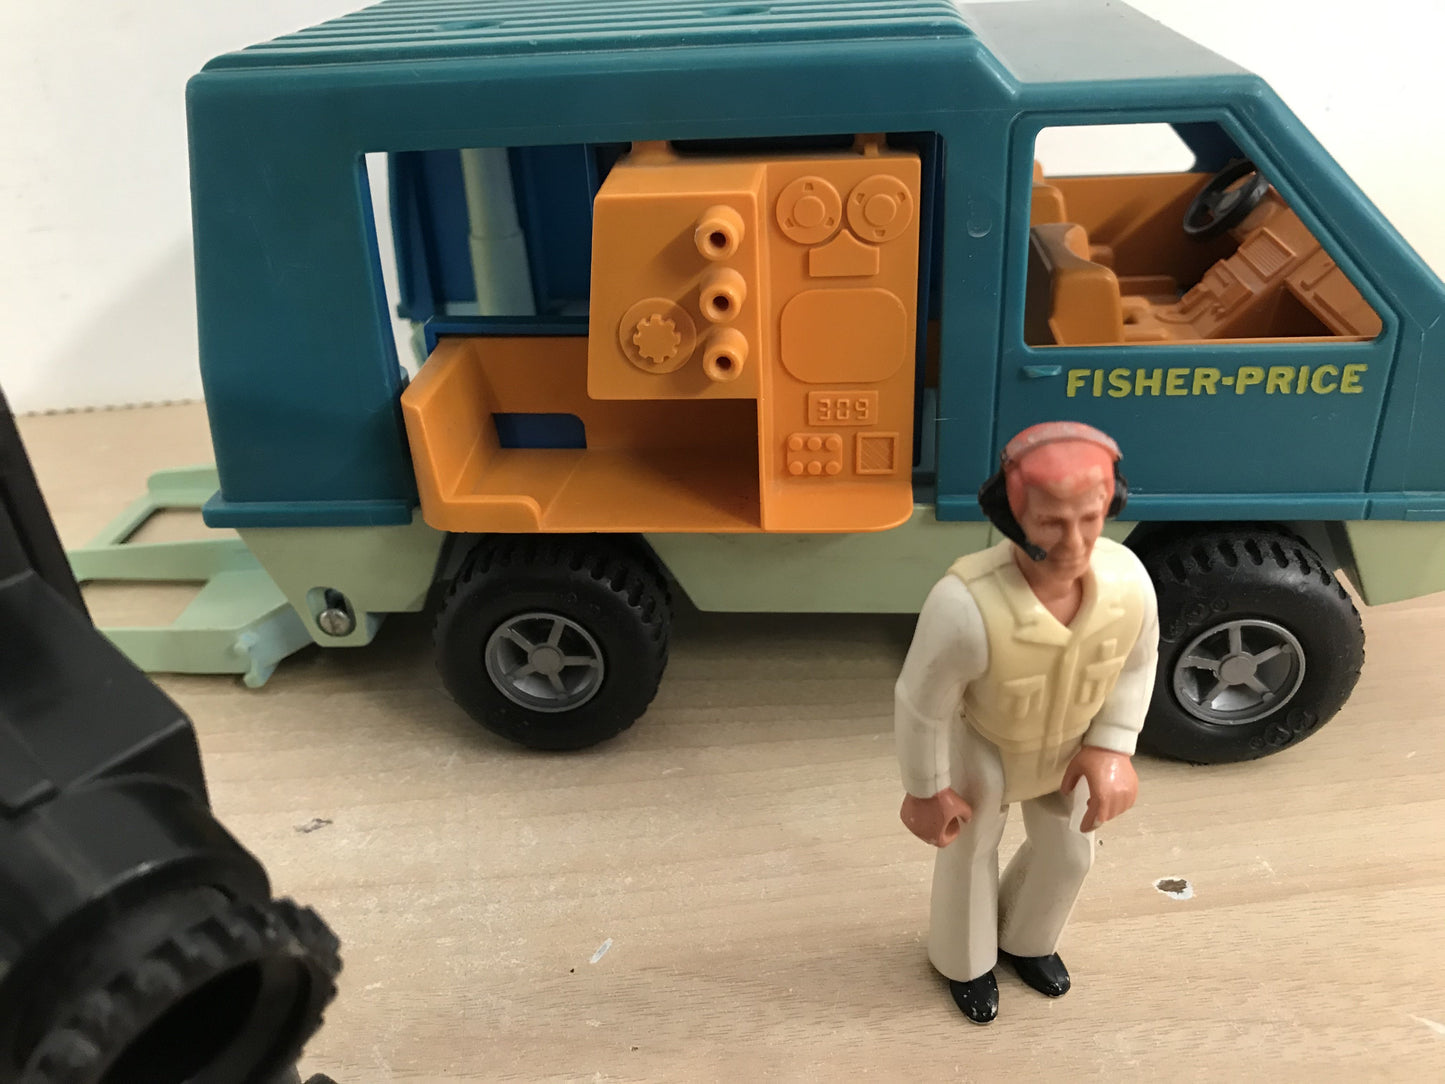 Fisher Price Vintage 1979 Adventure People Movie Van With Movie Equipment